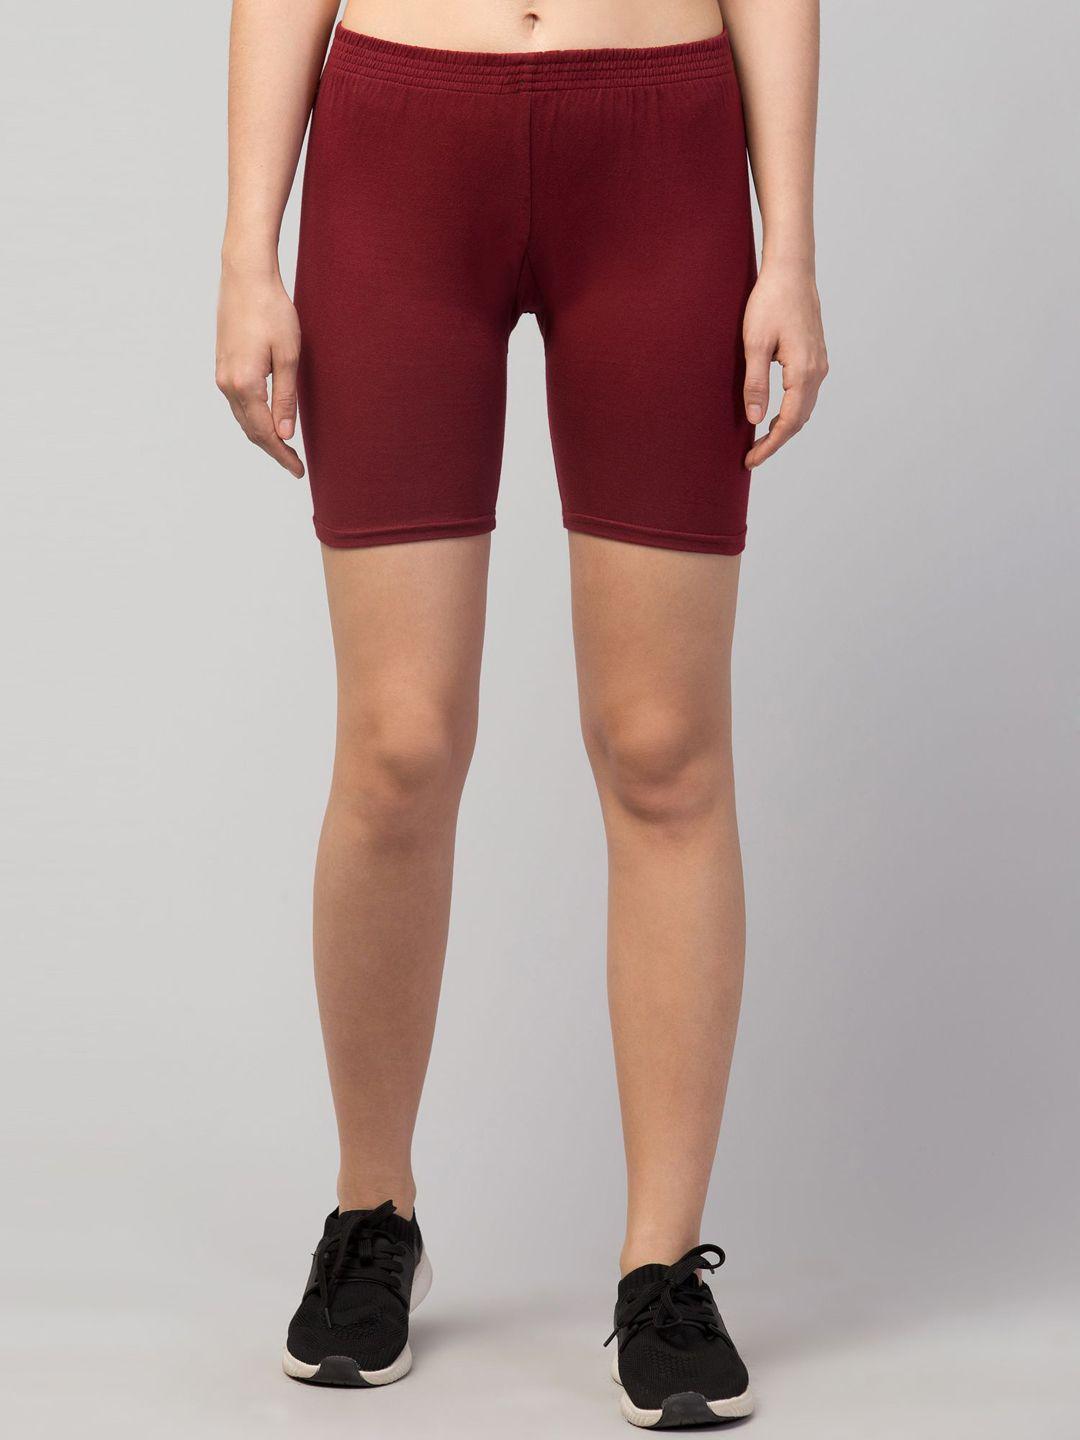 apraa & parma women maroon slim fit cycling sports shorts